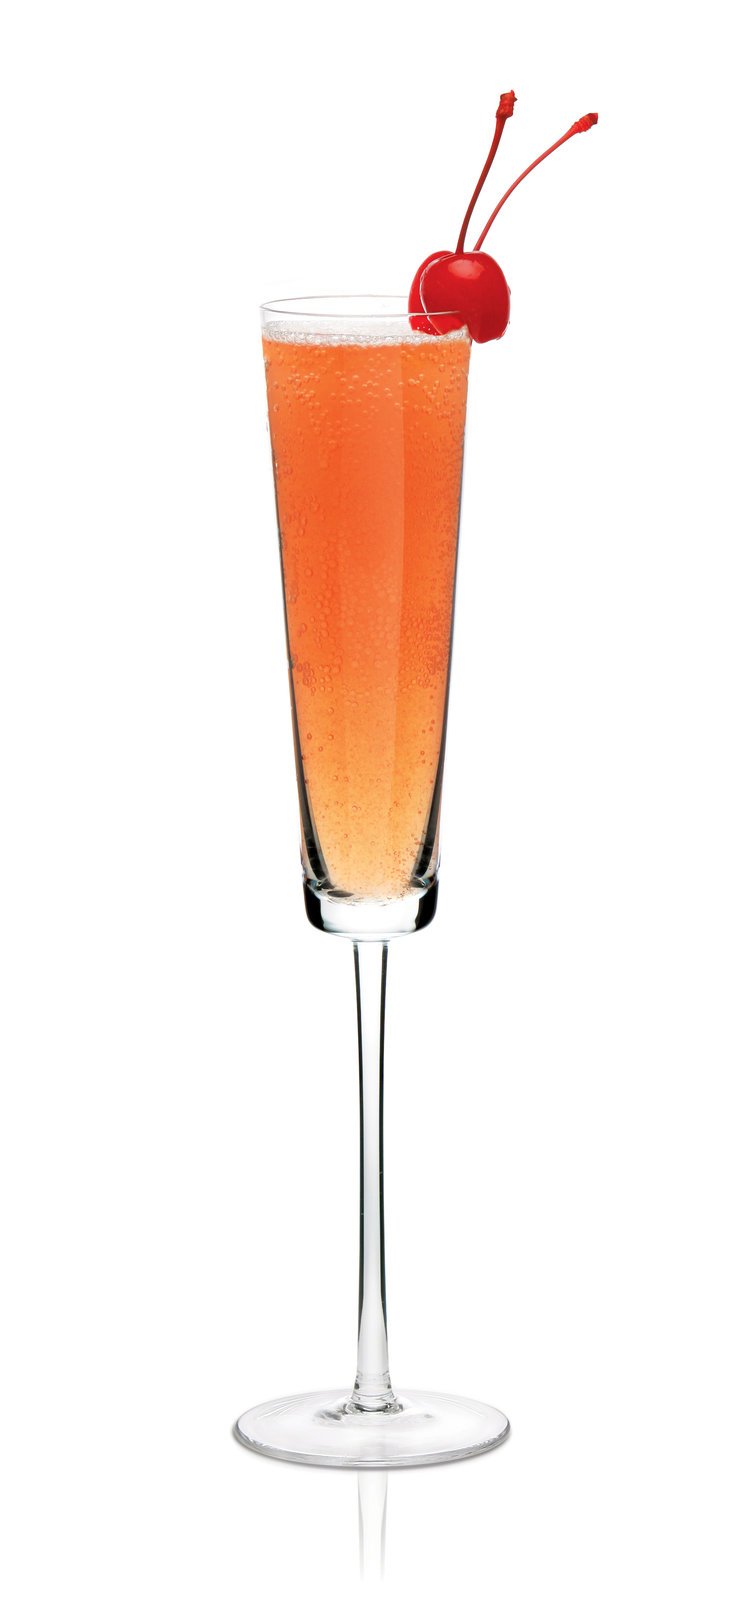 Mimosa -  Populární americký koktejl z jednoho dílu šampaňského a jednoho dílu vychlazeného pomerančového džusu.